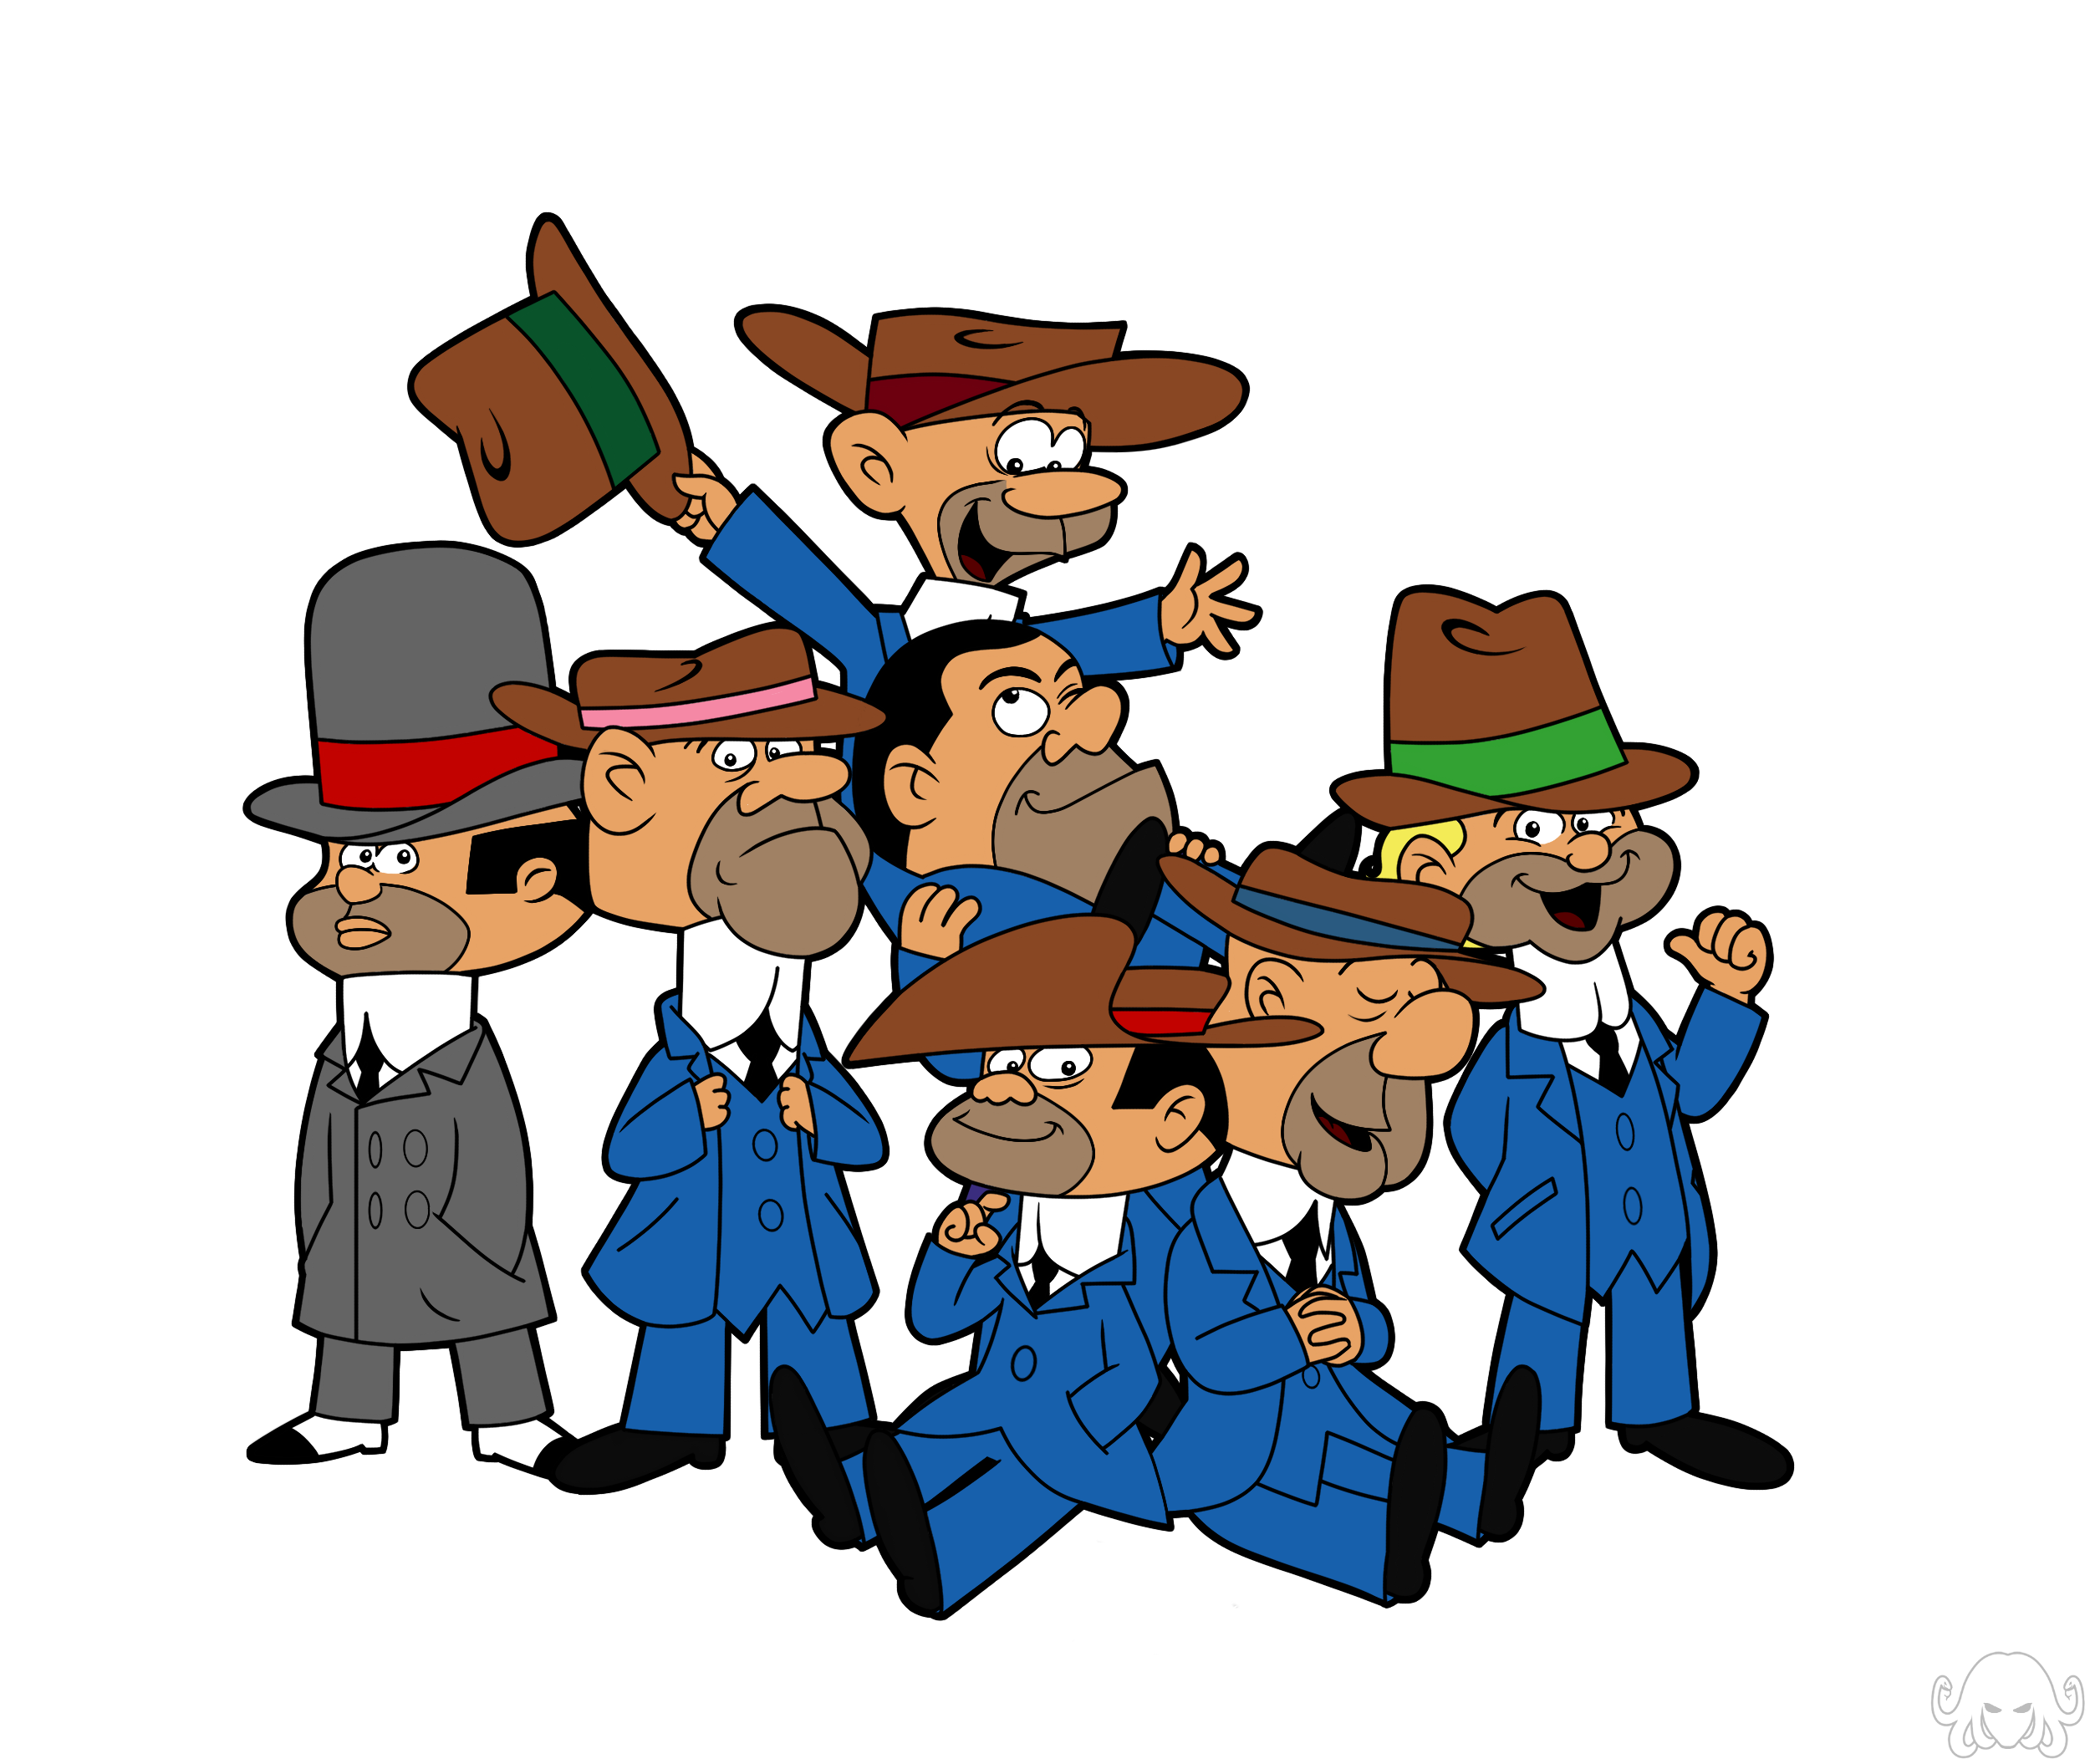 Ant hill mob cartoon